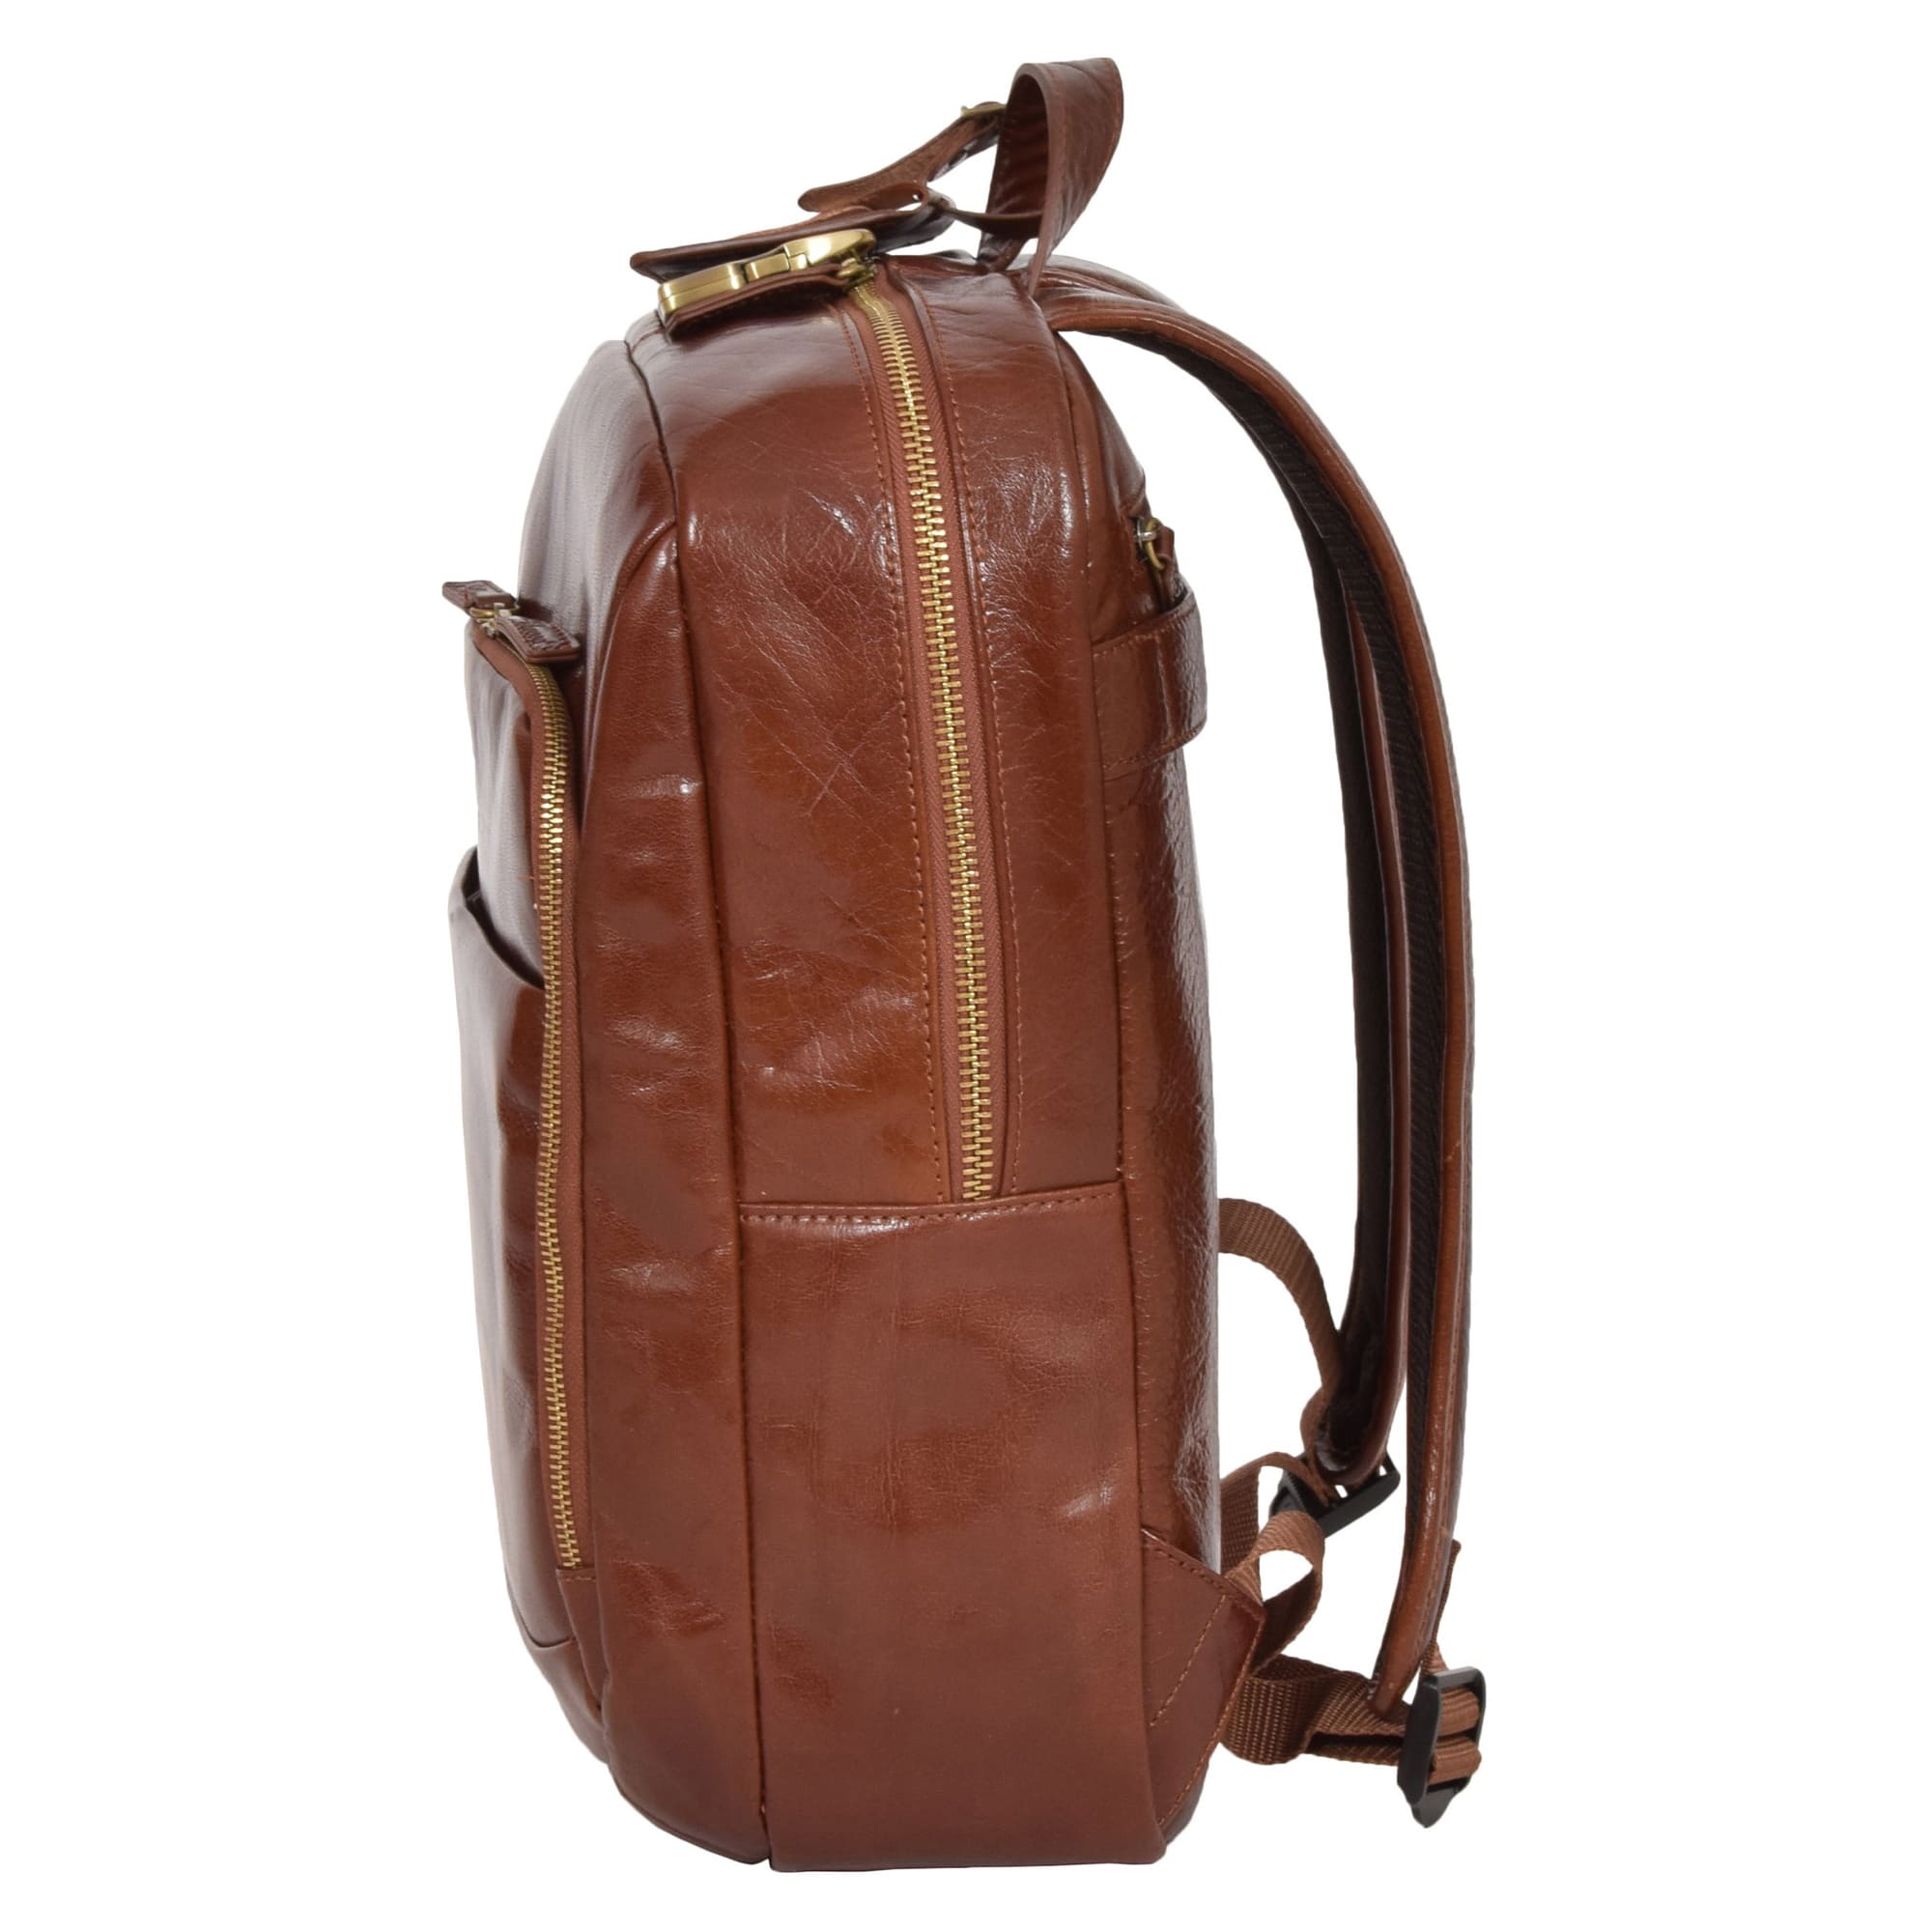 Premium Quality Exclusive Leather Backpack Organiser Rucksack Peru Tan